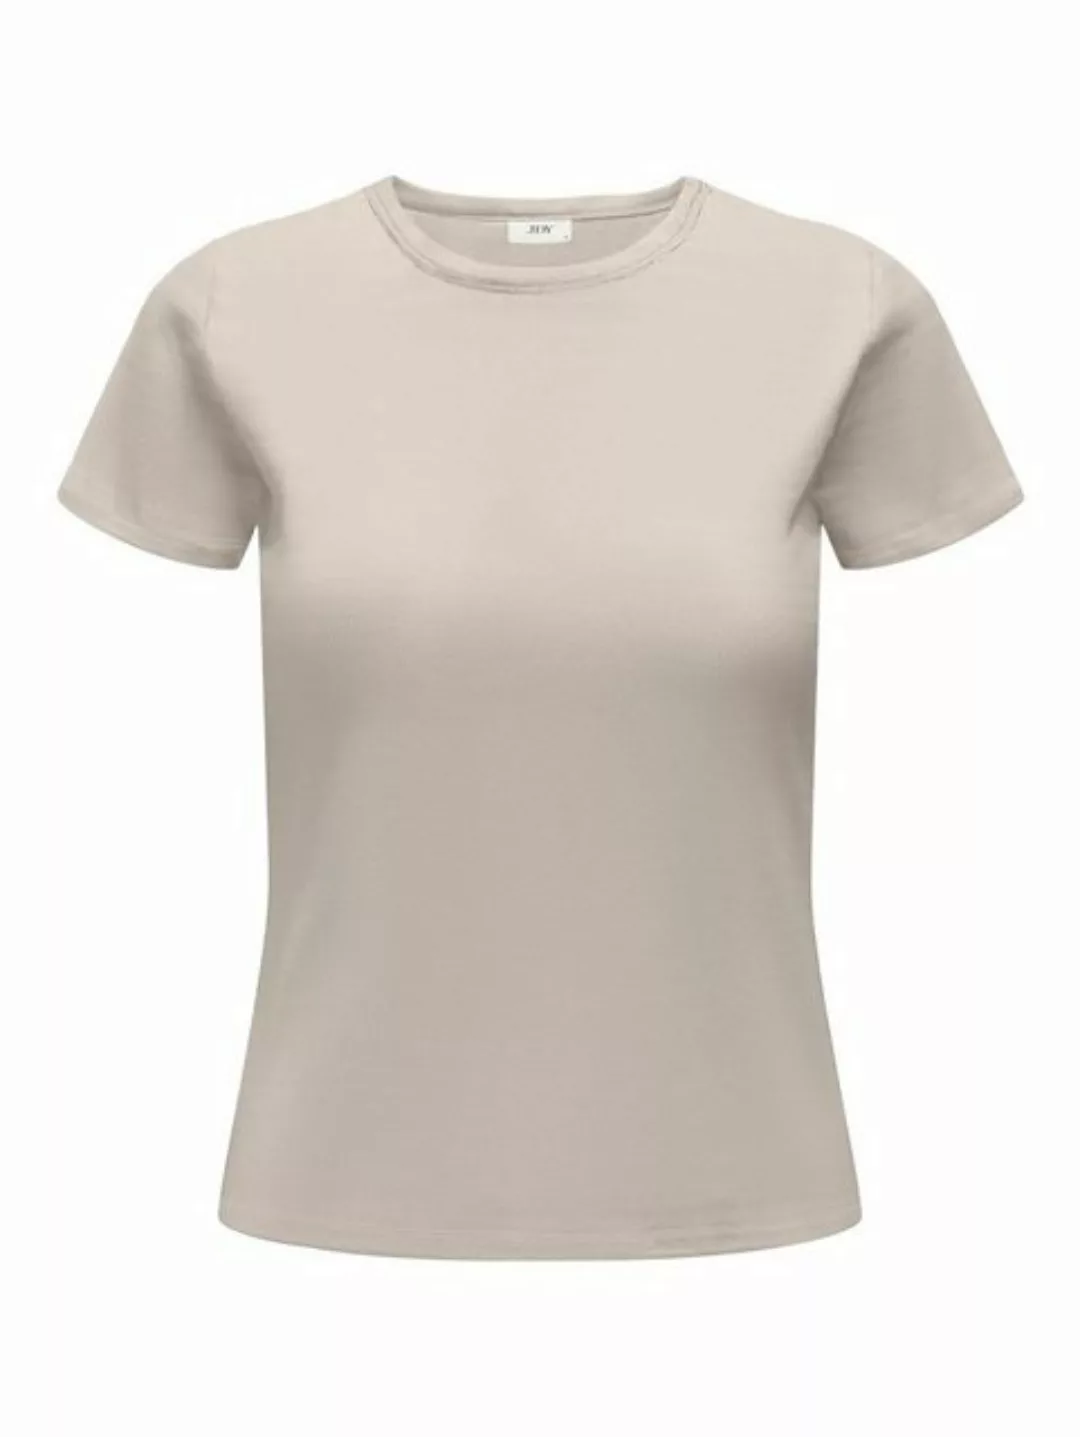 JACQUELINE de YONG T-Shirt Gestreiftes Shirt Top Basic Rundhals Oberteil JD günstig online kaufen